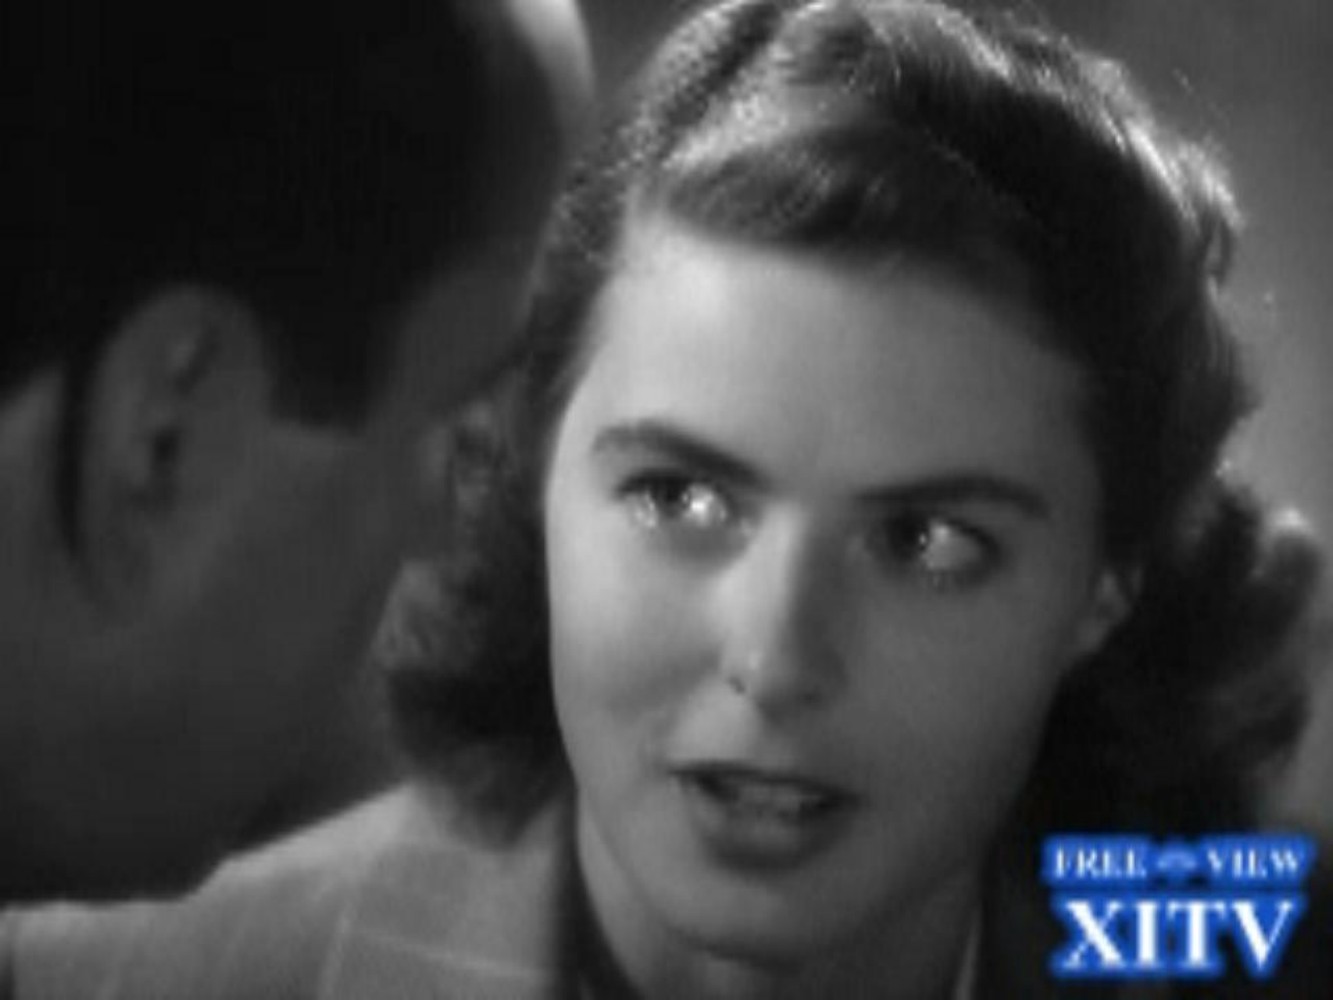 Watch Now! XITV FREE <> VIEW Casablanca! Starring Ingrid Bergman and Humphrey Bogart! XITV Is Must See TV!